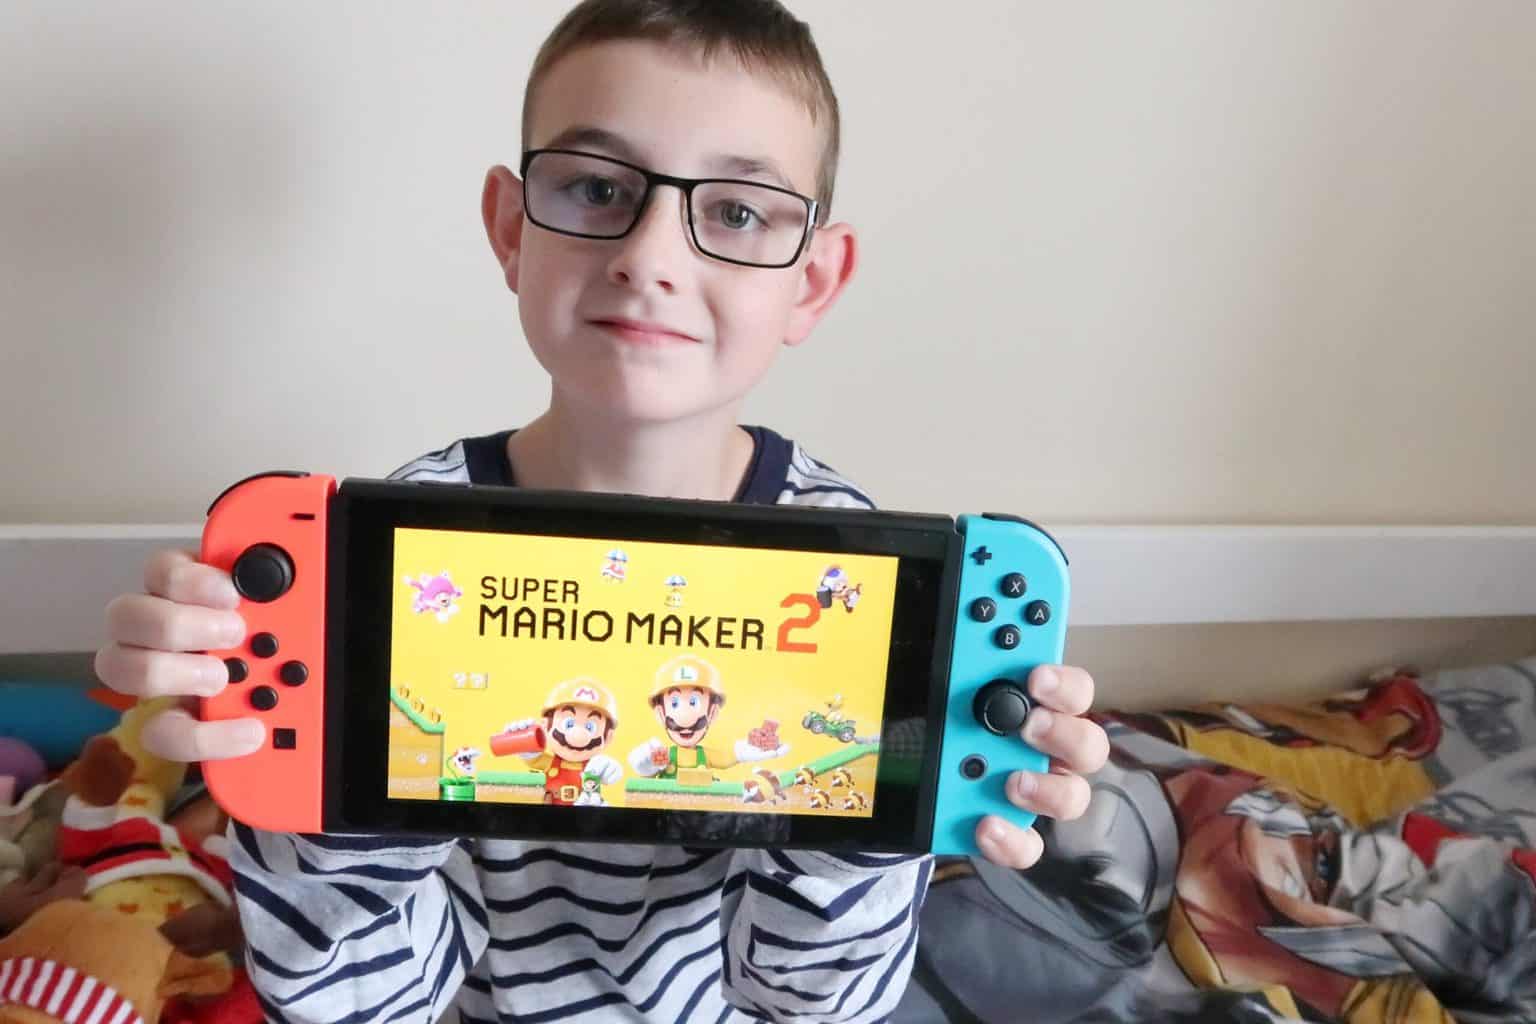 Super Mario Maker 2 - Nintendo Switch, Nintendo Switch